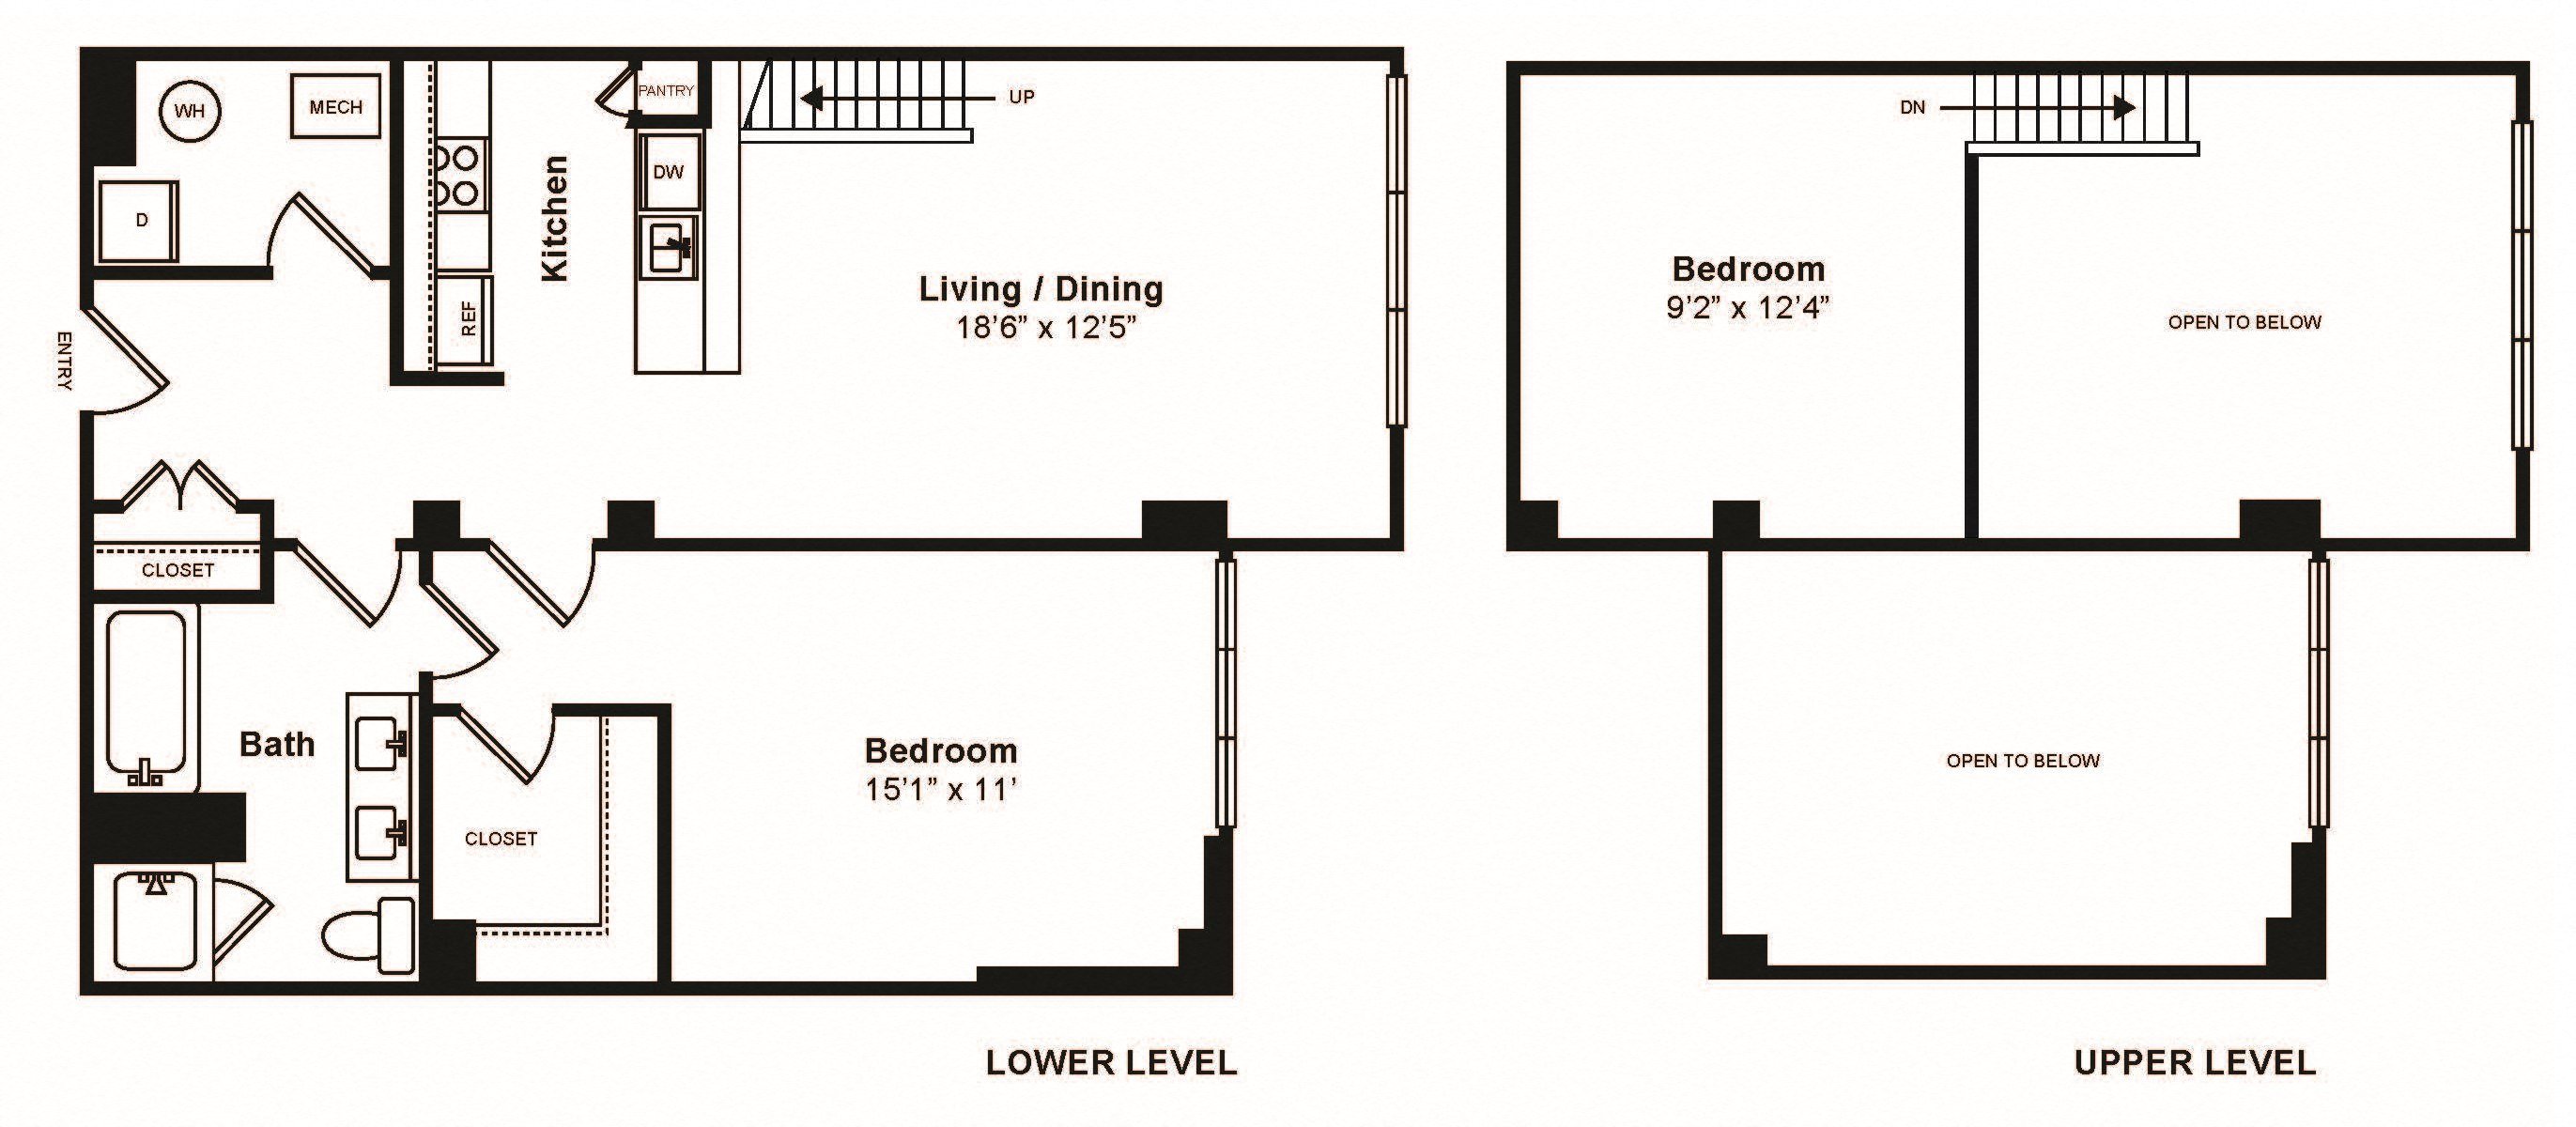 1L Loft Floorplan Image